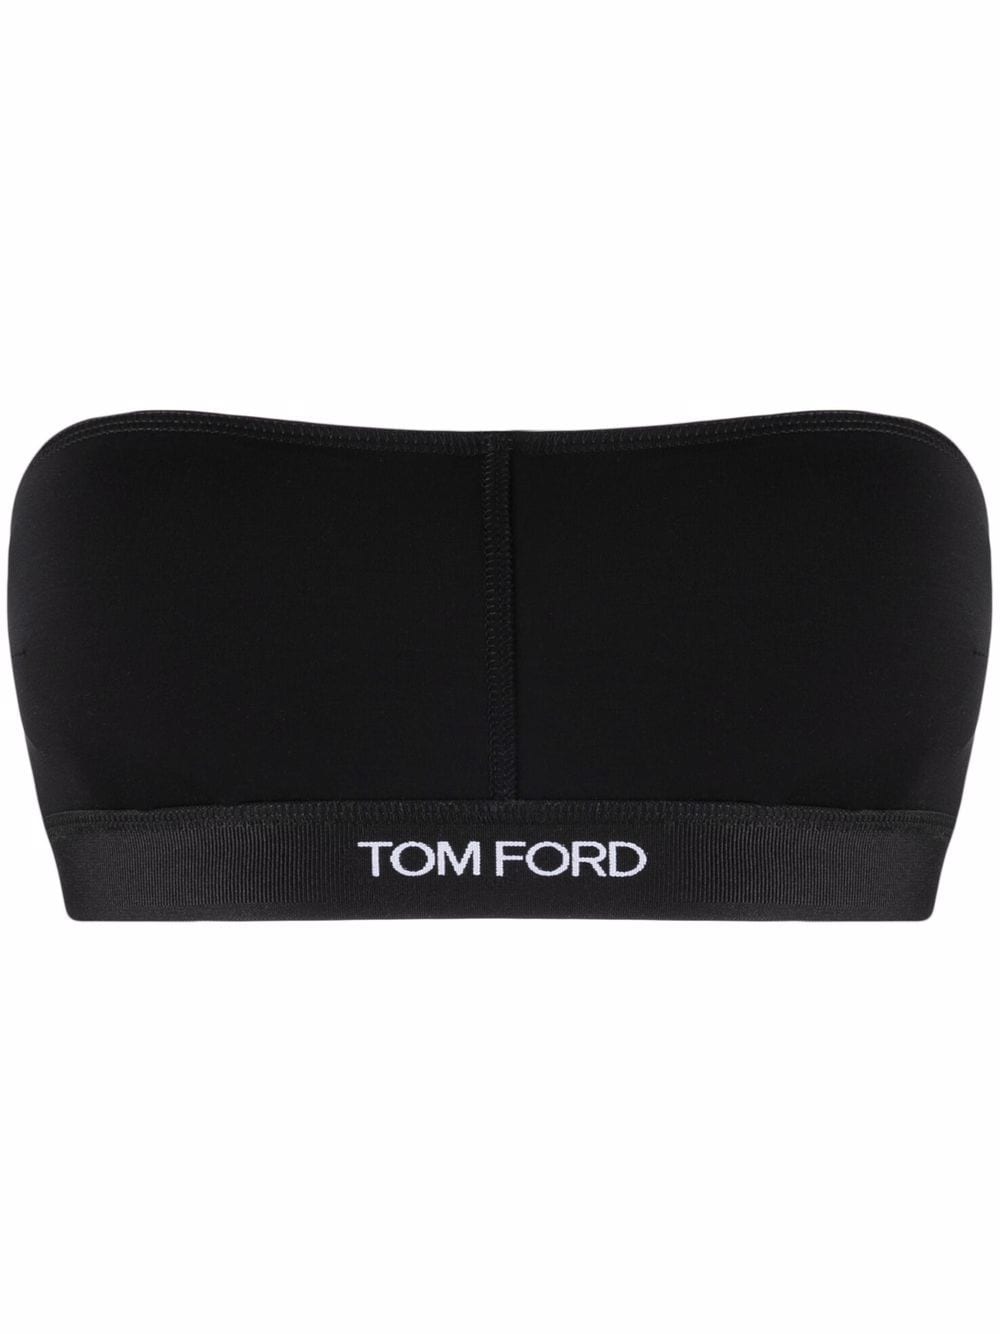 Image 1 of TOM FORD soutien-gorge bandeau à logo brodé